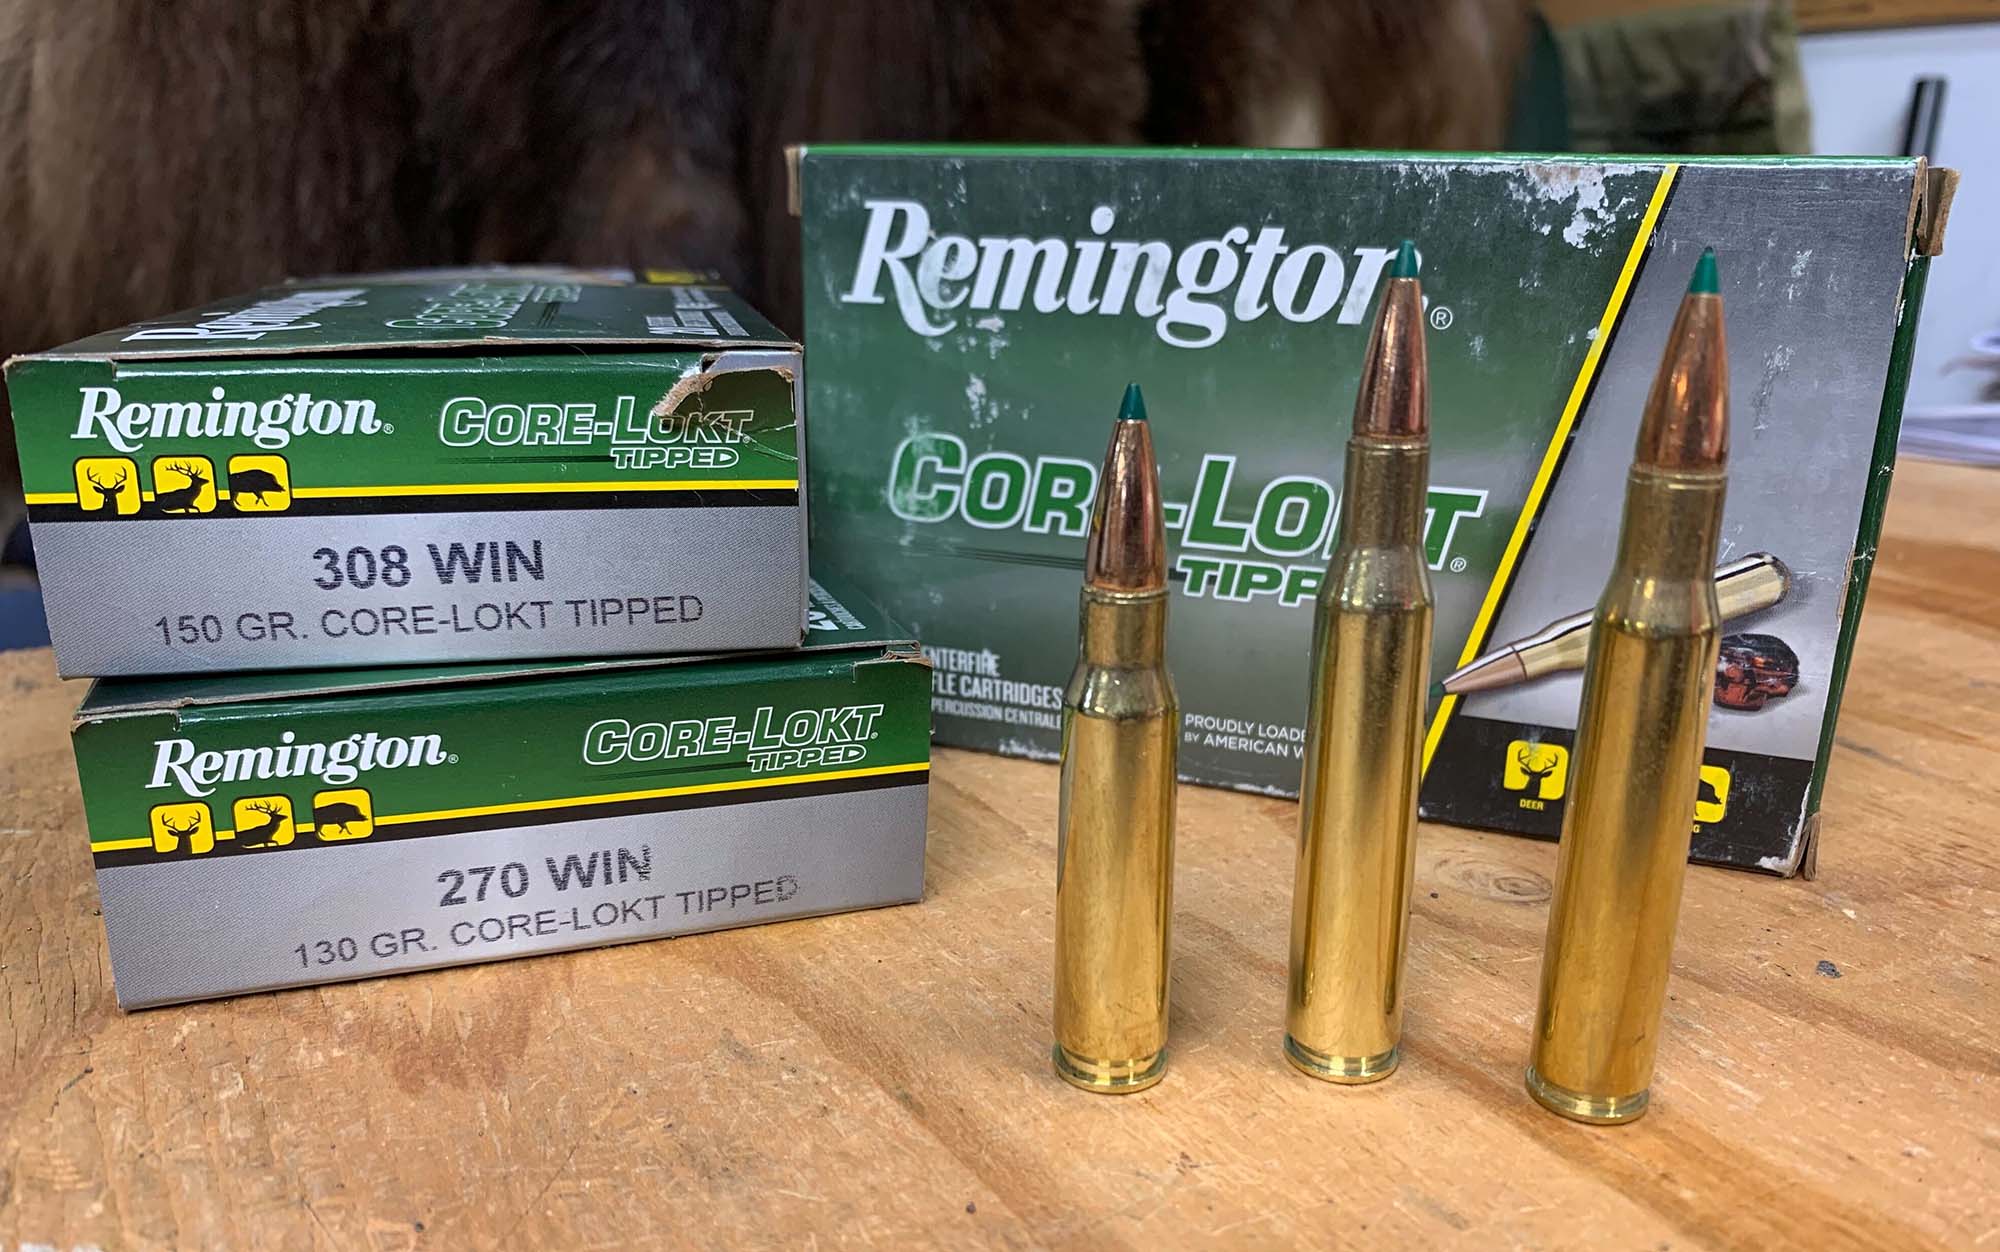 A box of Remington Core-Lokt